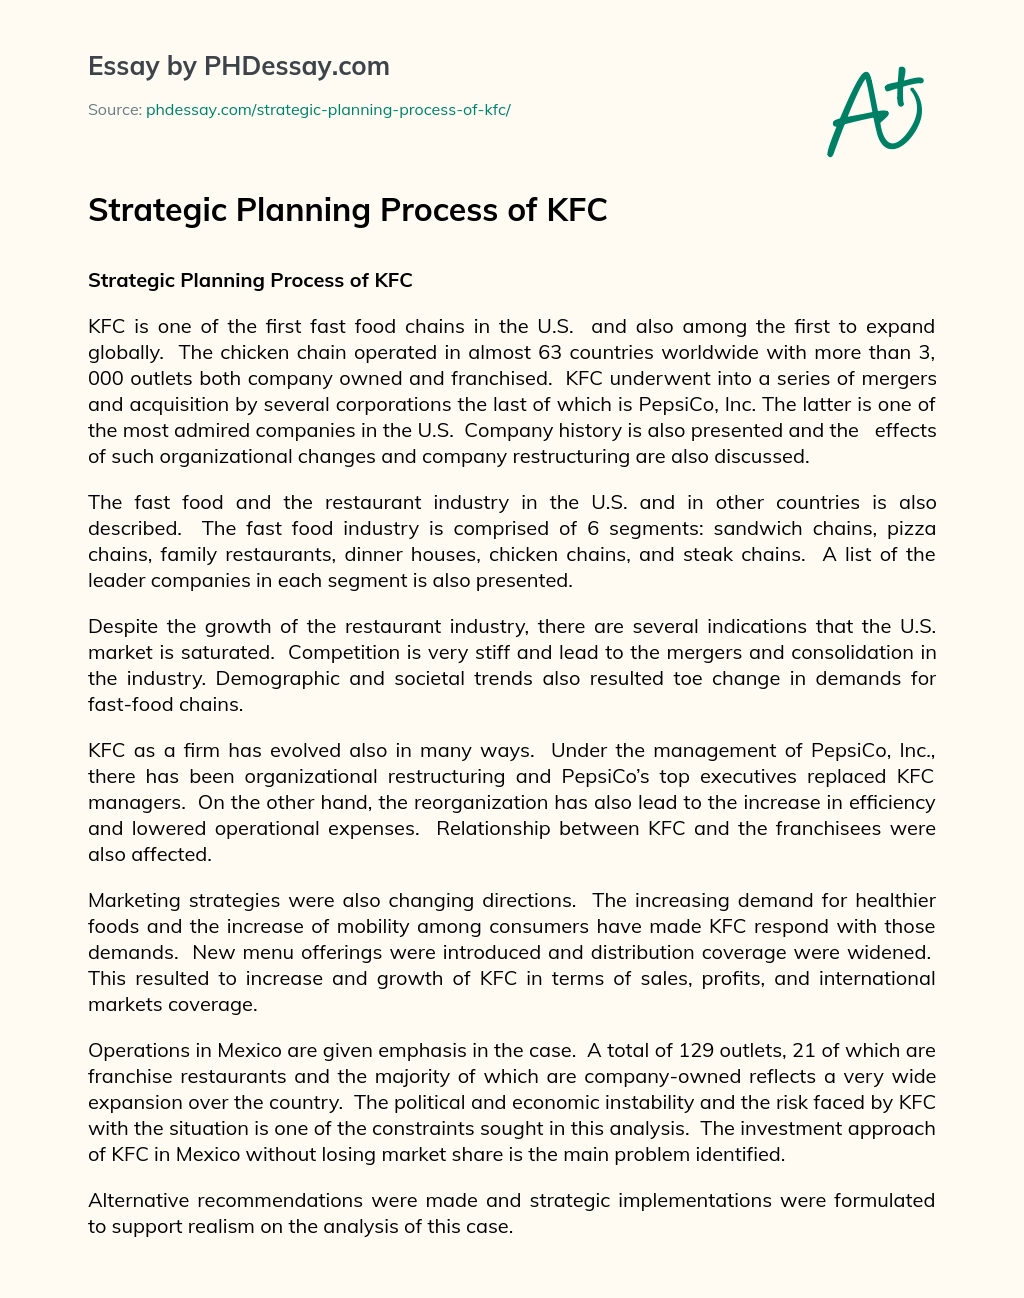 Strategic Planning Process of KFC essay